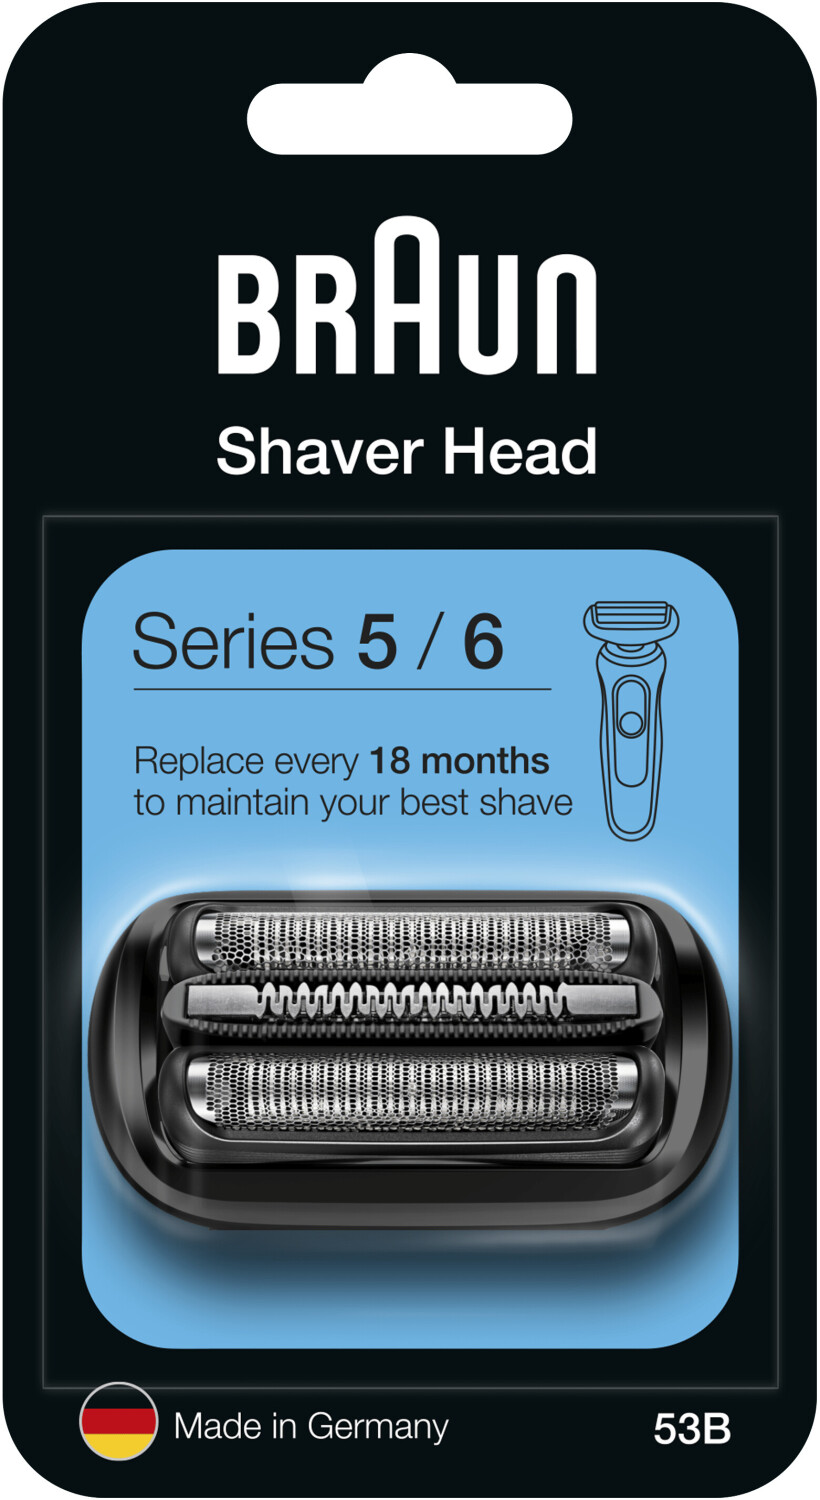 Braun Shaver Head 53B